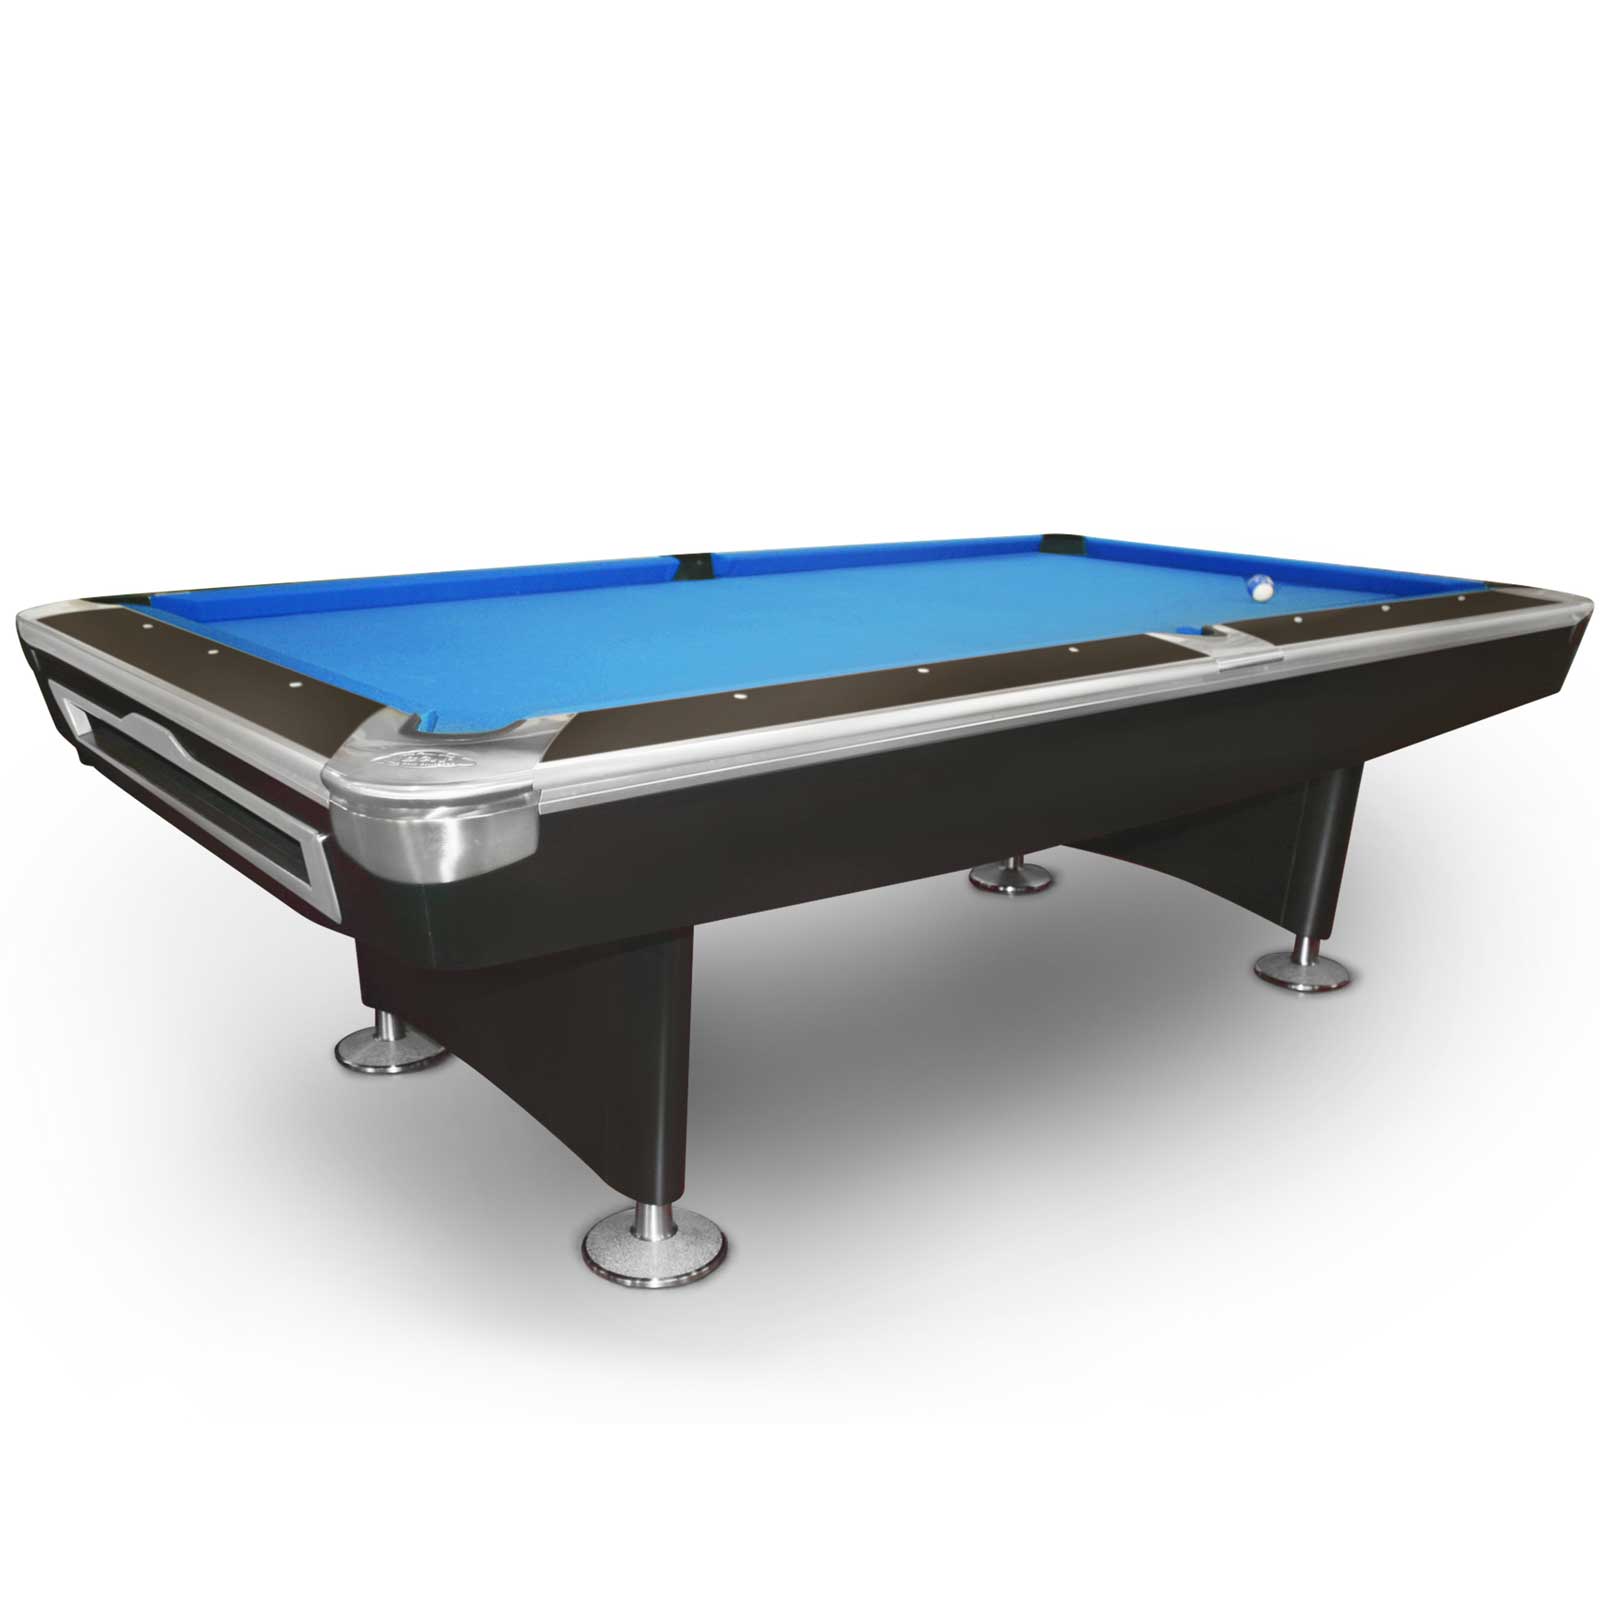 9 Foot Slate American Styled Billiards 9 Ball Table - Black body with Blue felt